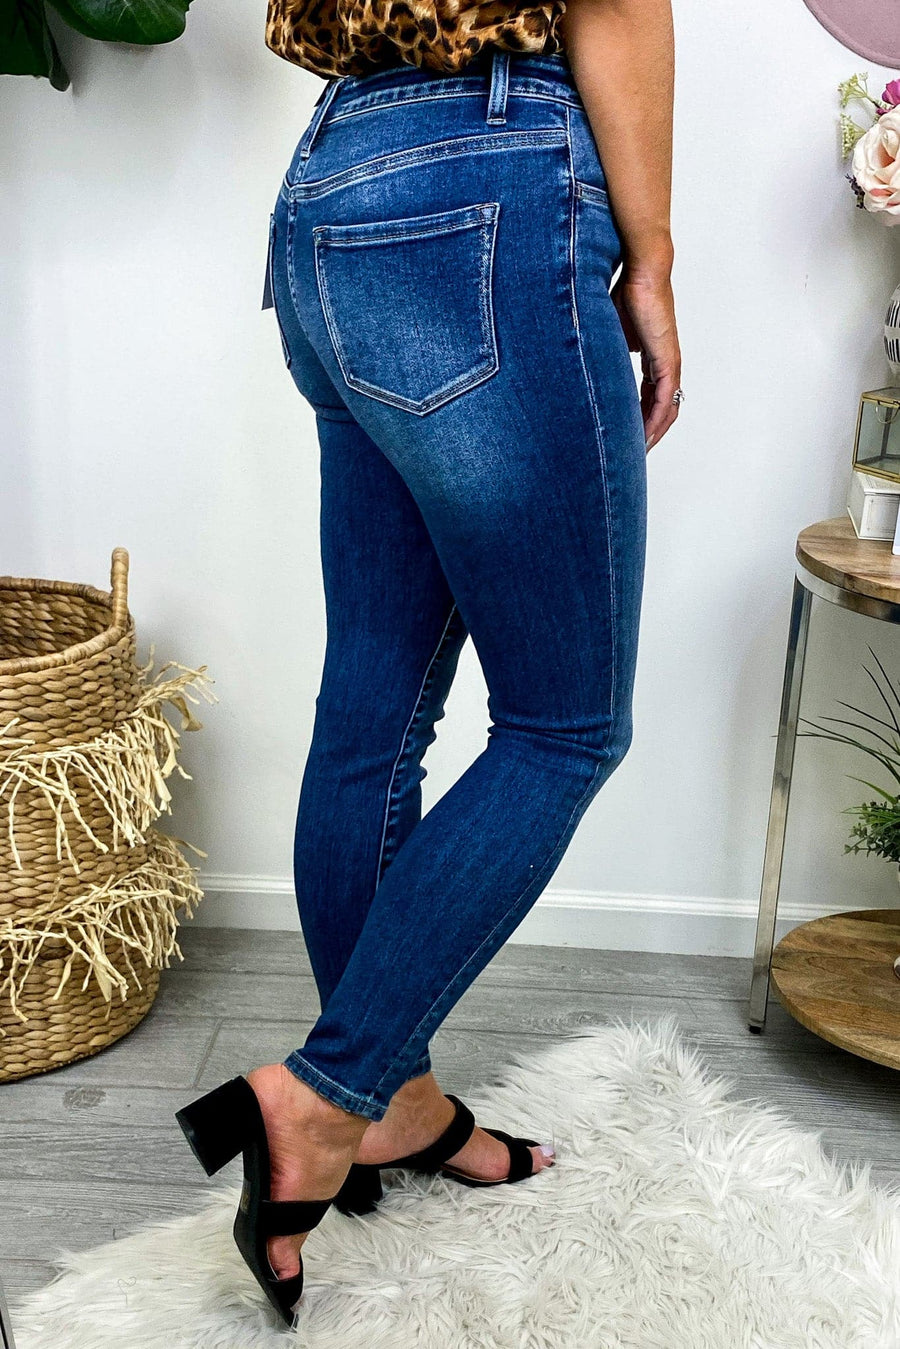  MaKenlee High Rise Skinny Jeans - kitchencabinetmagic